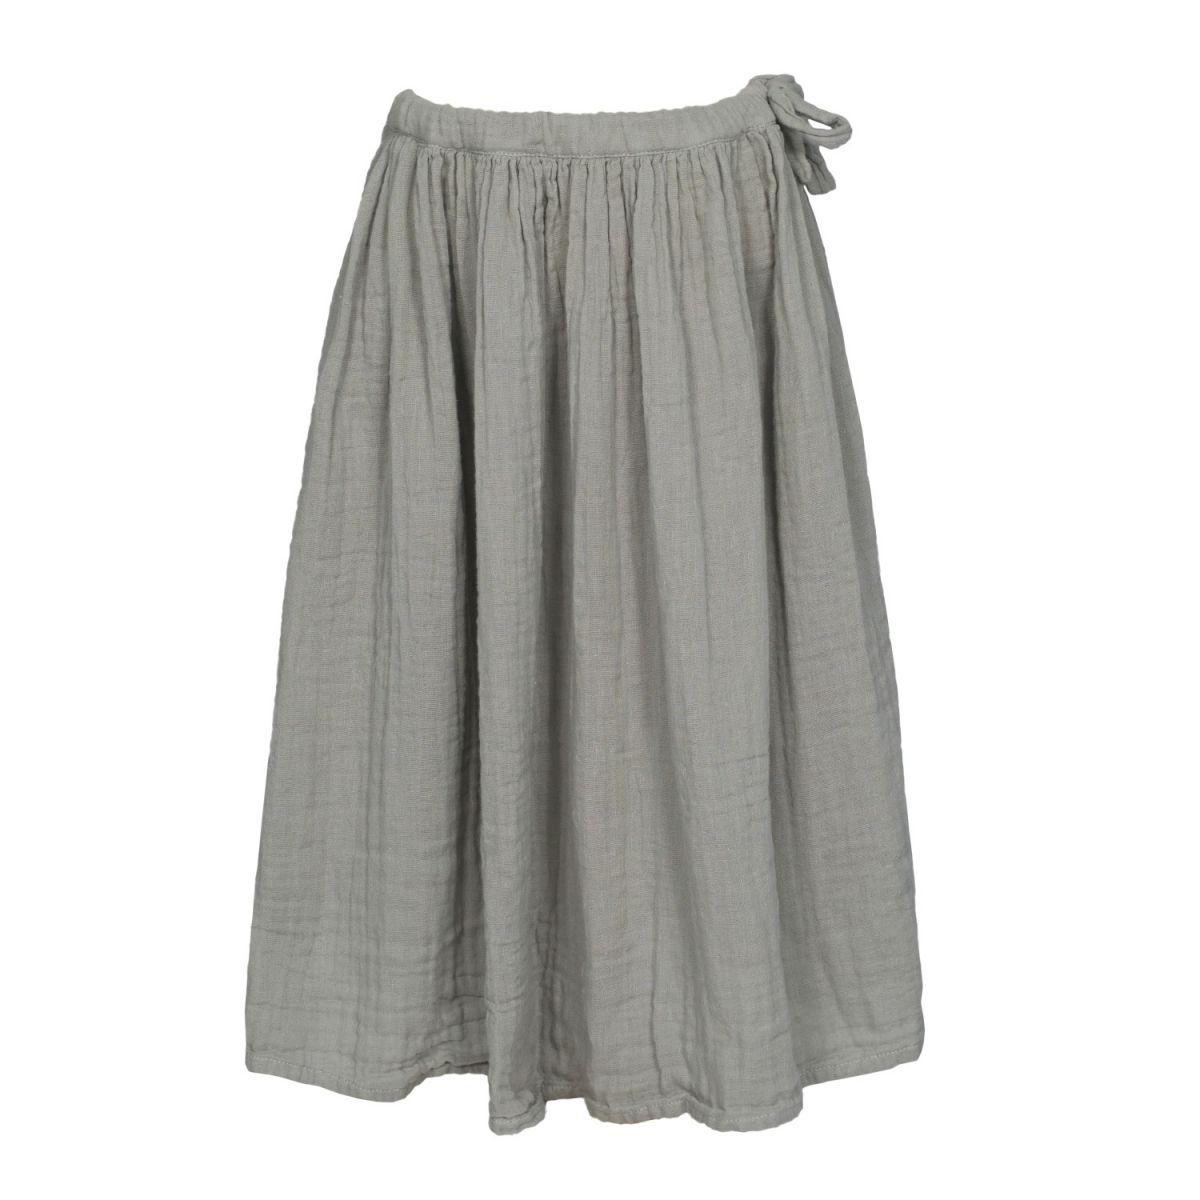 grey colour long skirt